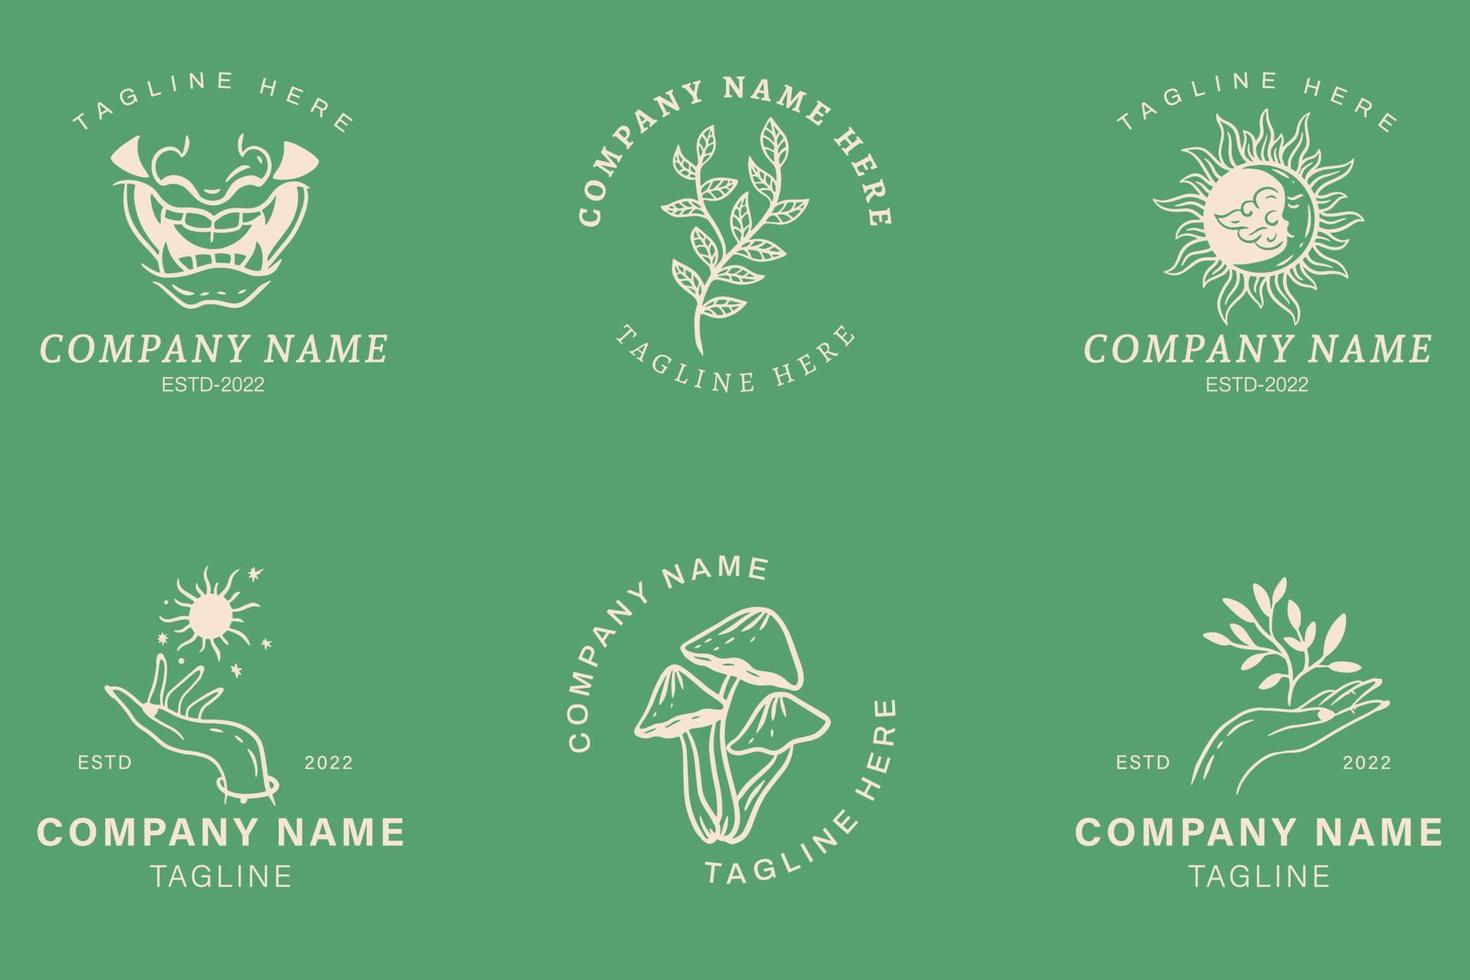 místico simples creme minimalista símbolo logotipo coleção verde pastel estilo. vetor